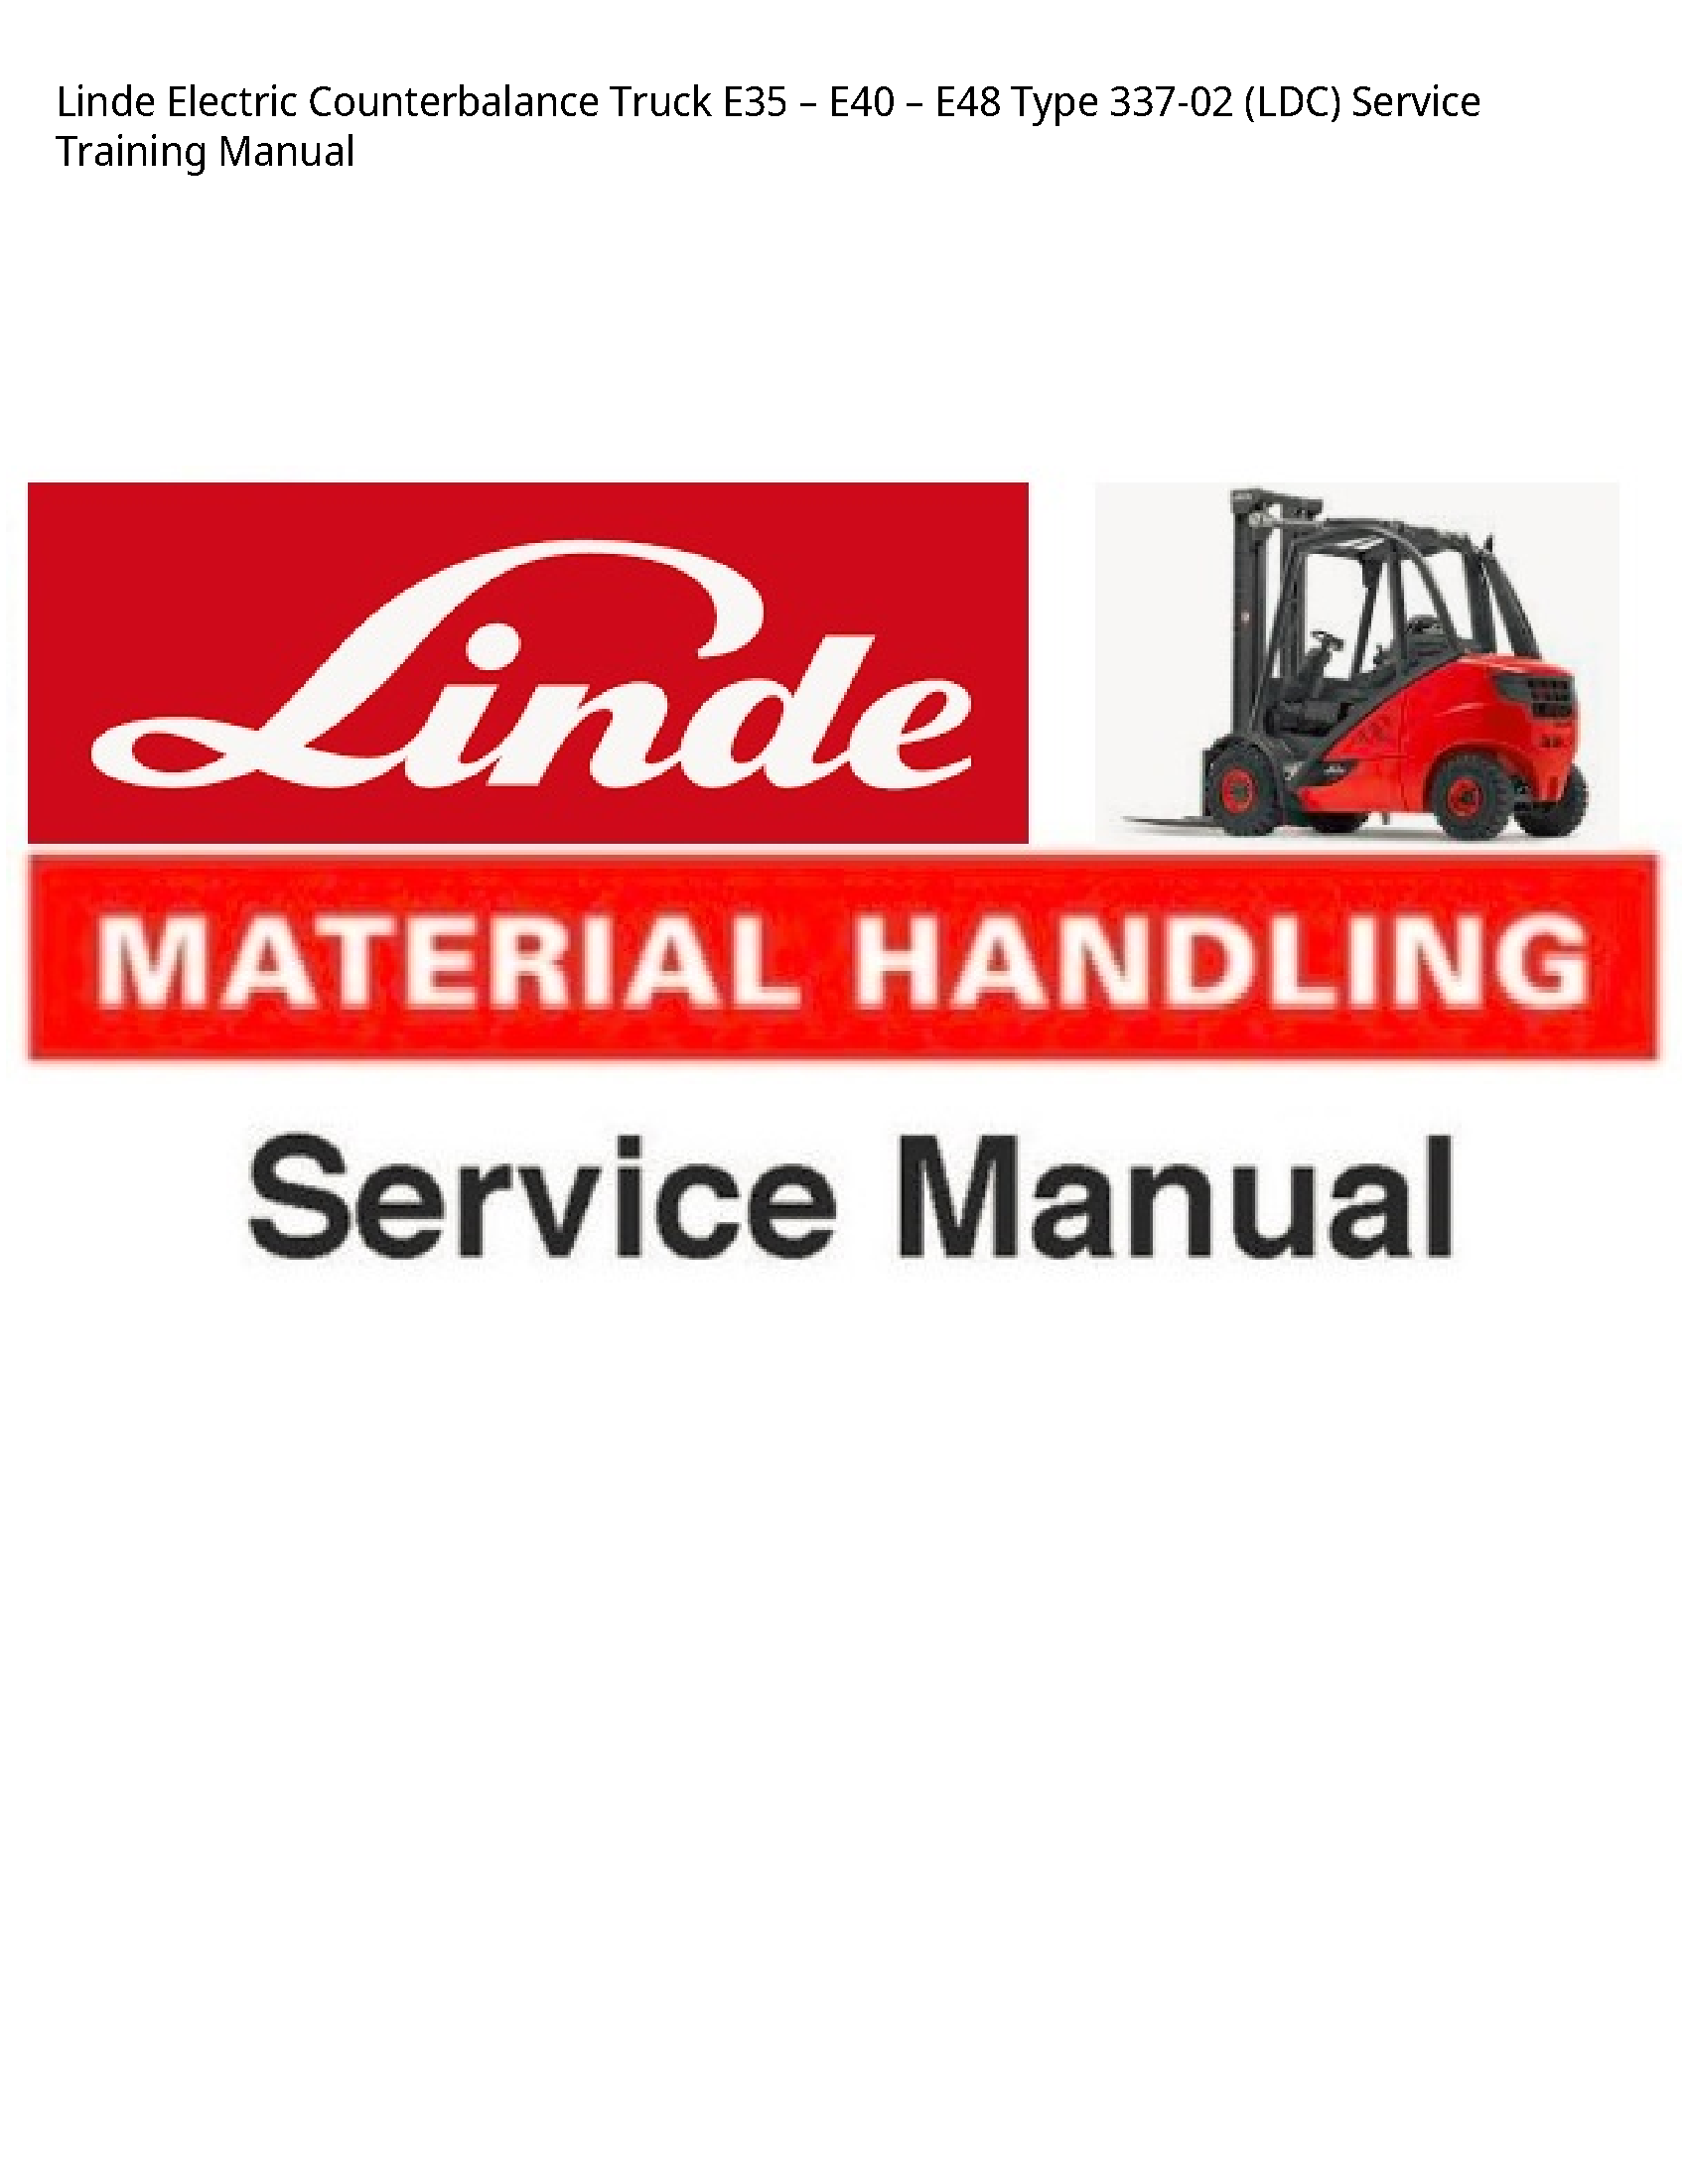 Linde E35 Electric Counterbalance Truck Type (LDC) Service Training manual